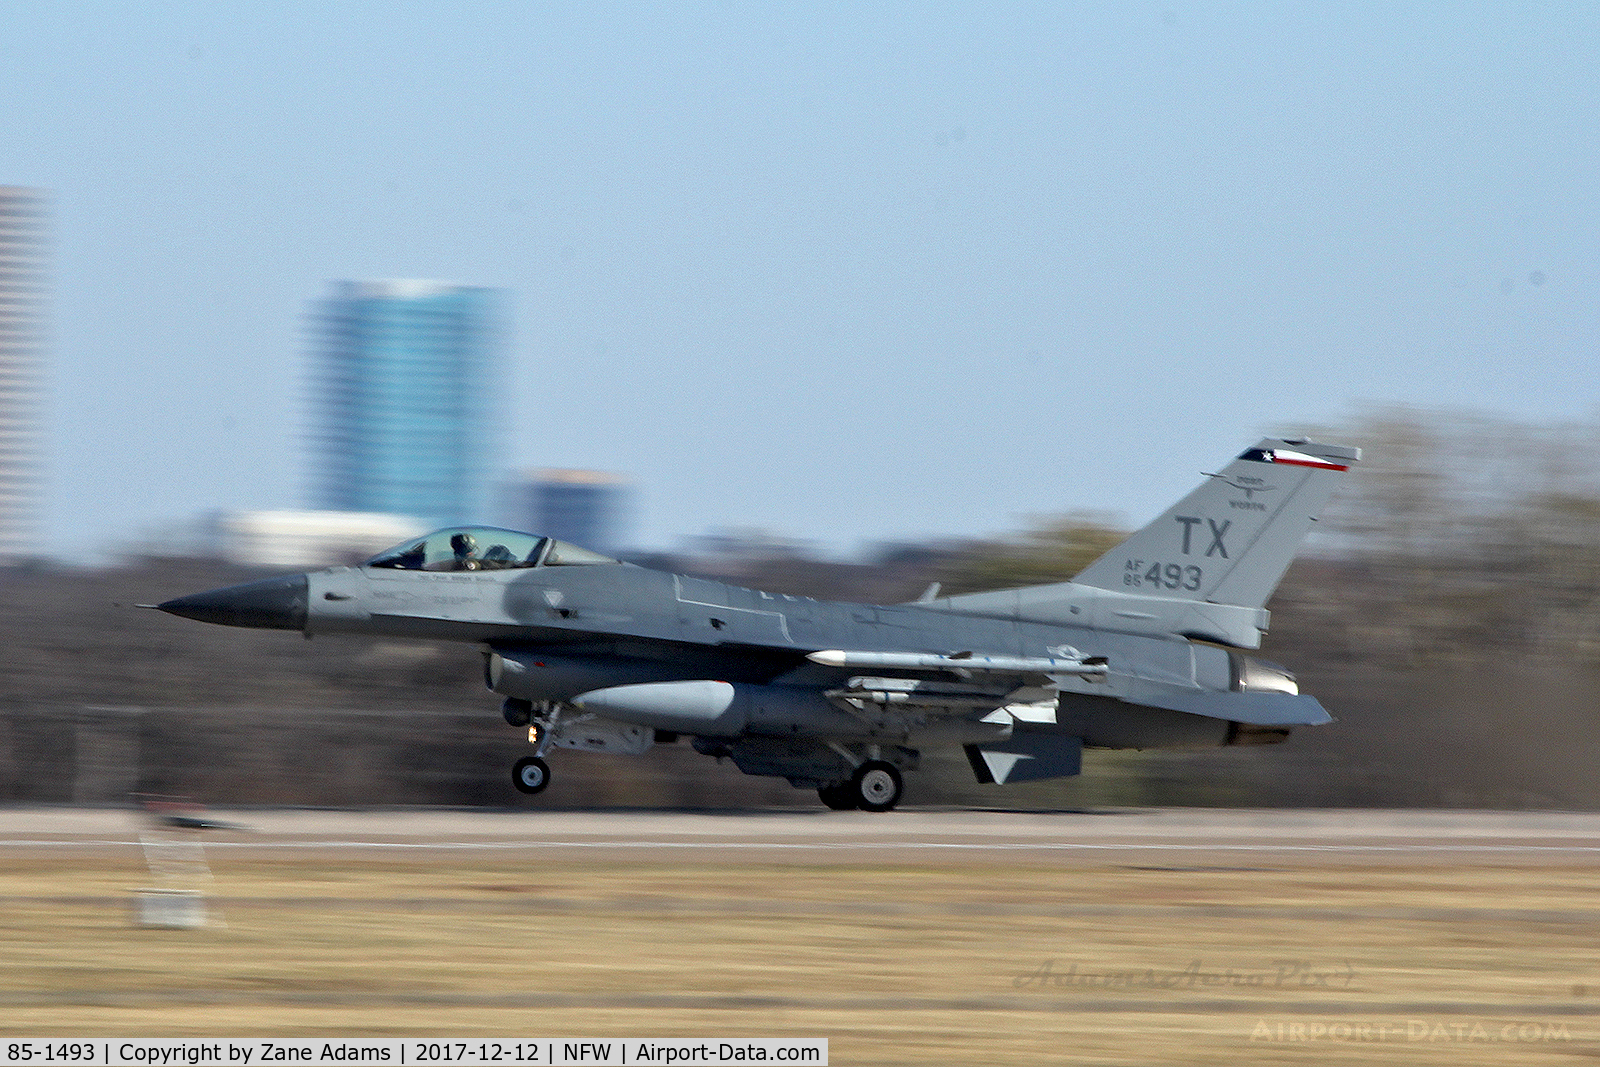 85-1493, 1985 General Dynamics F-16C Fighting Falcon C/N 5C-273, Departing NAS Fort Worth